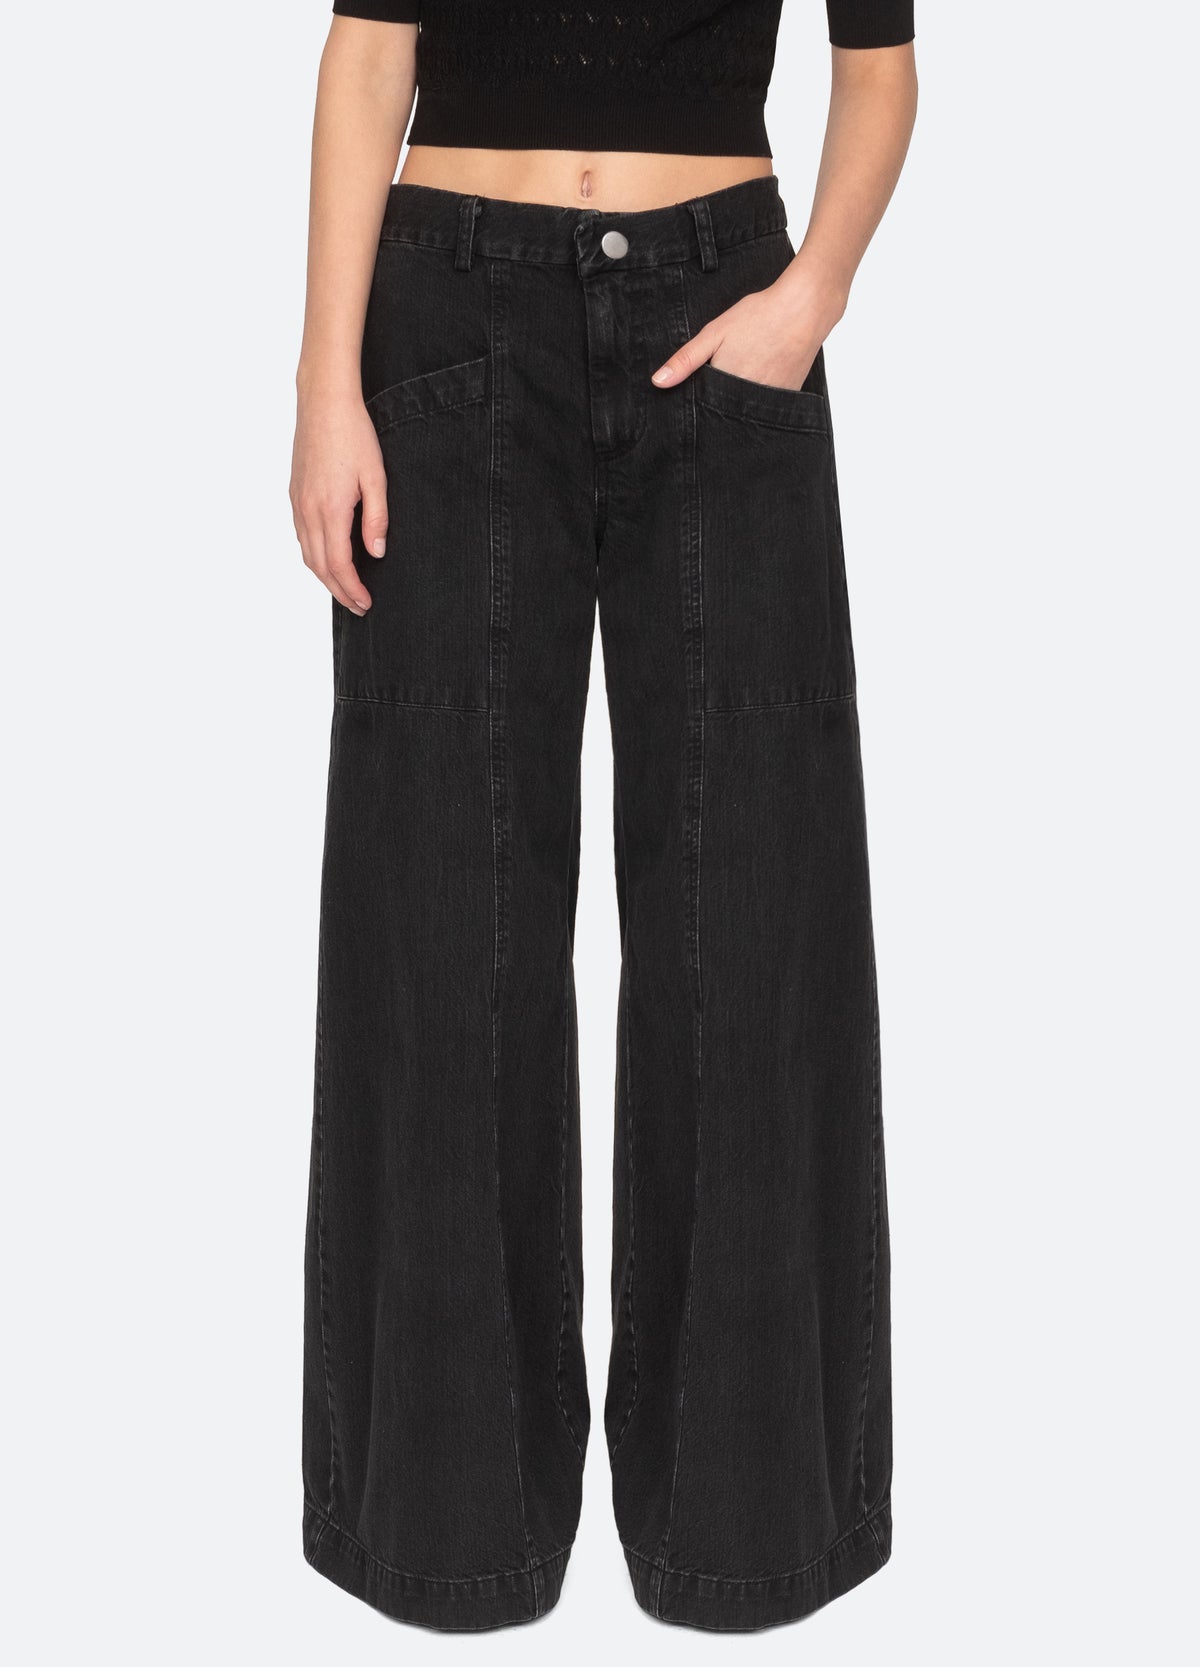 black-velma jeans-front view